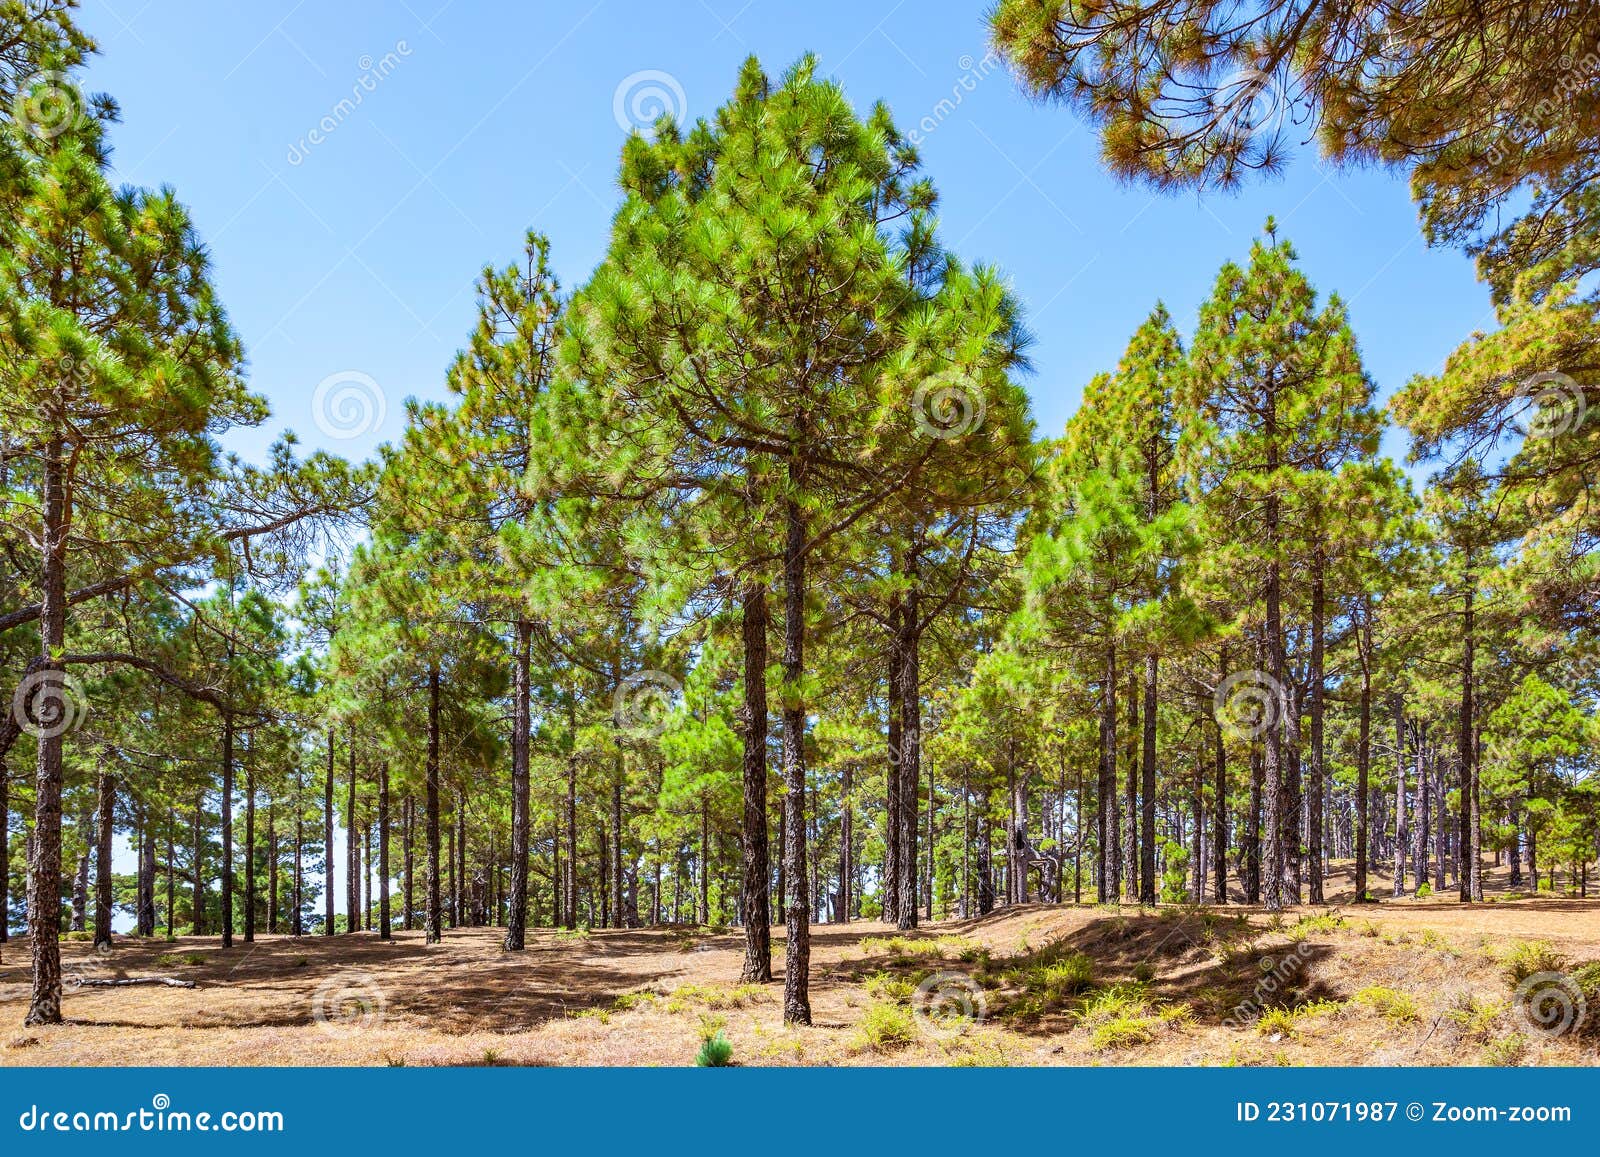 pine tree forest in el hierro